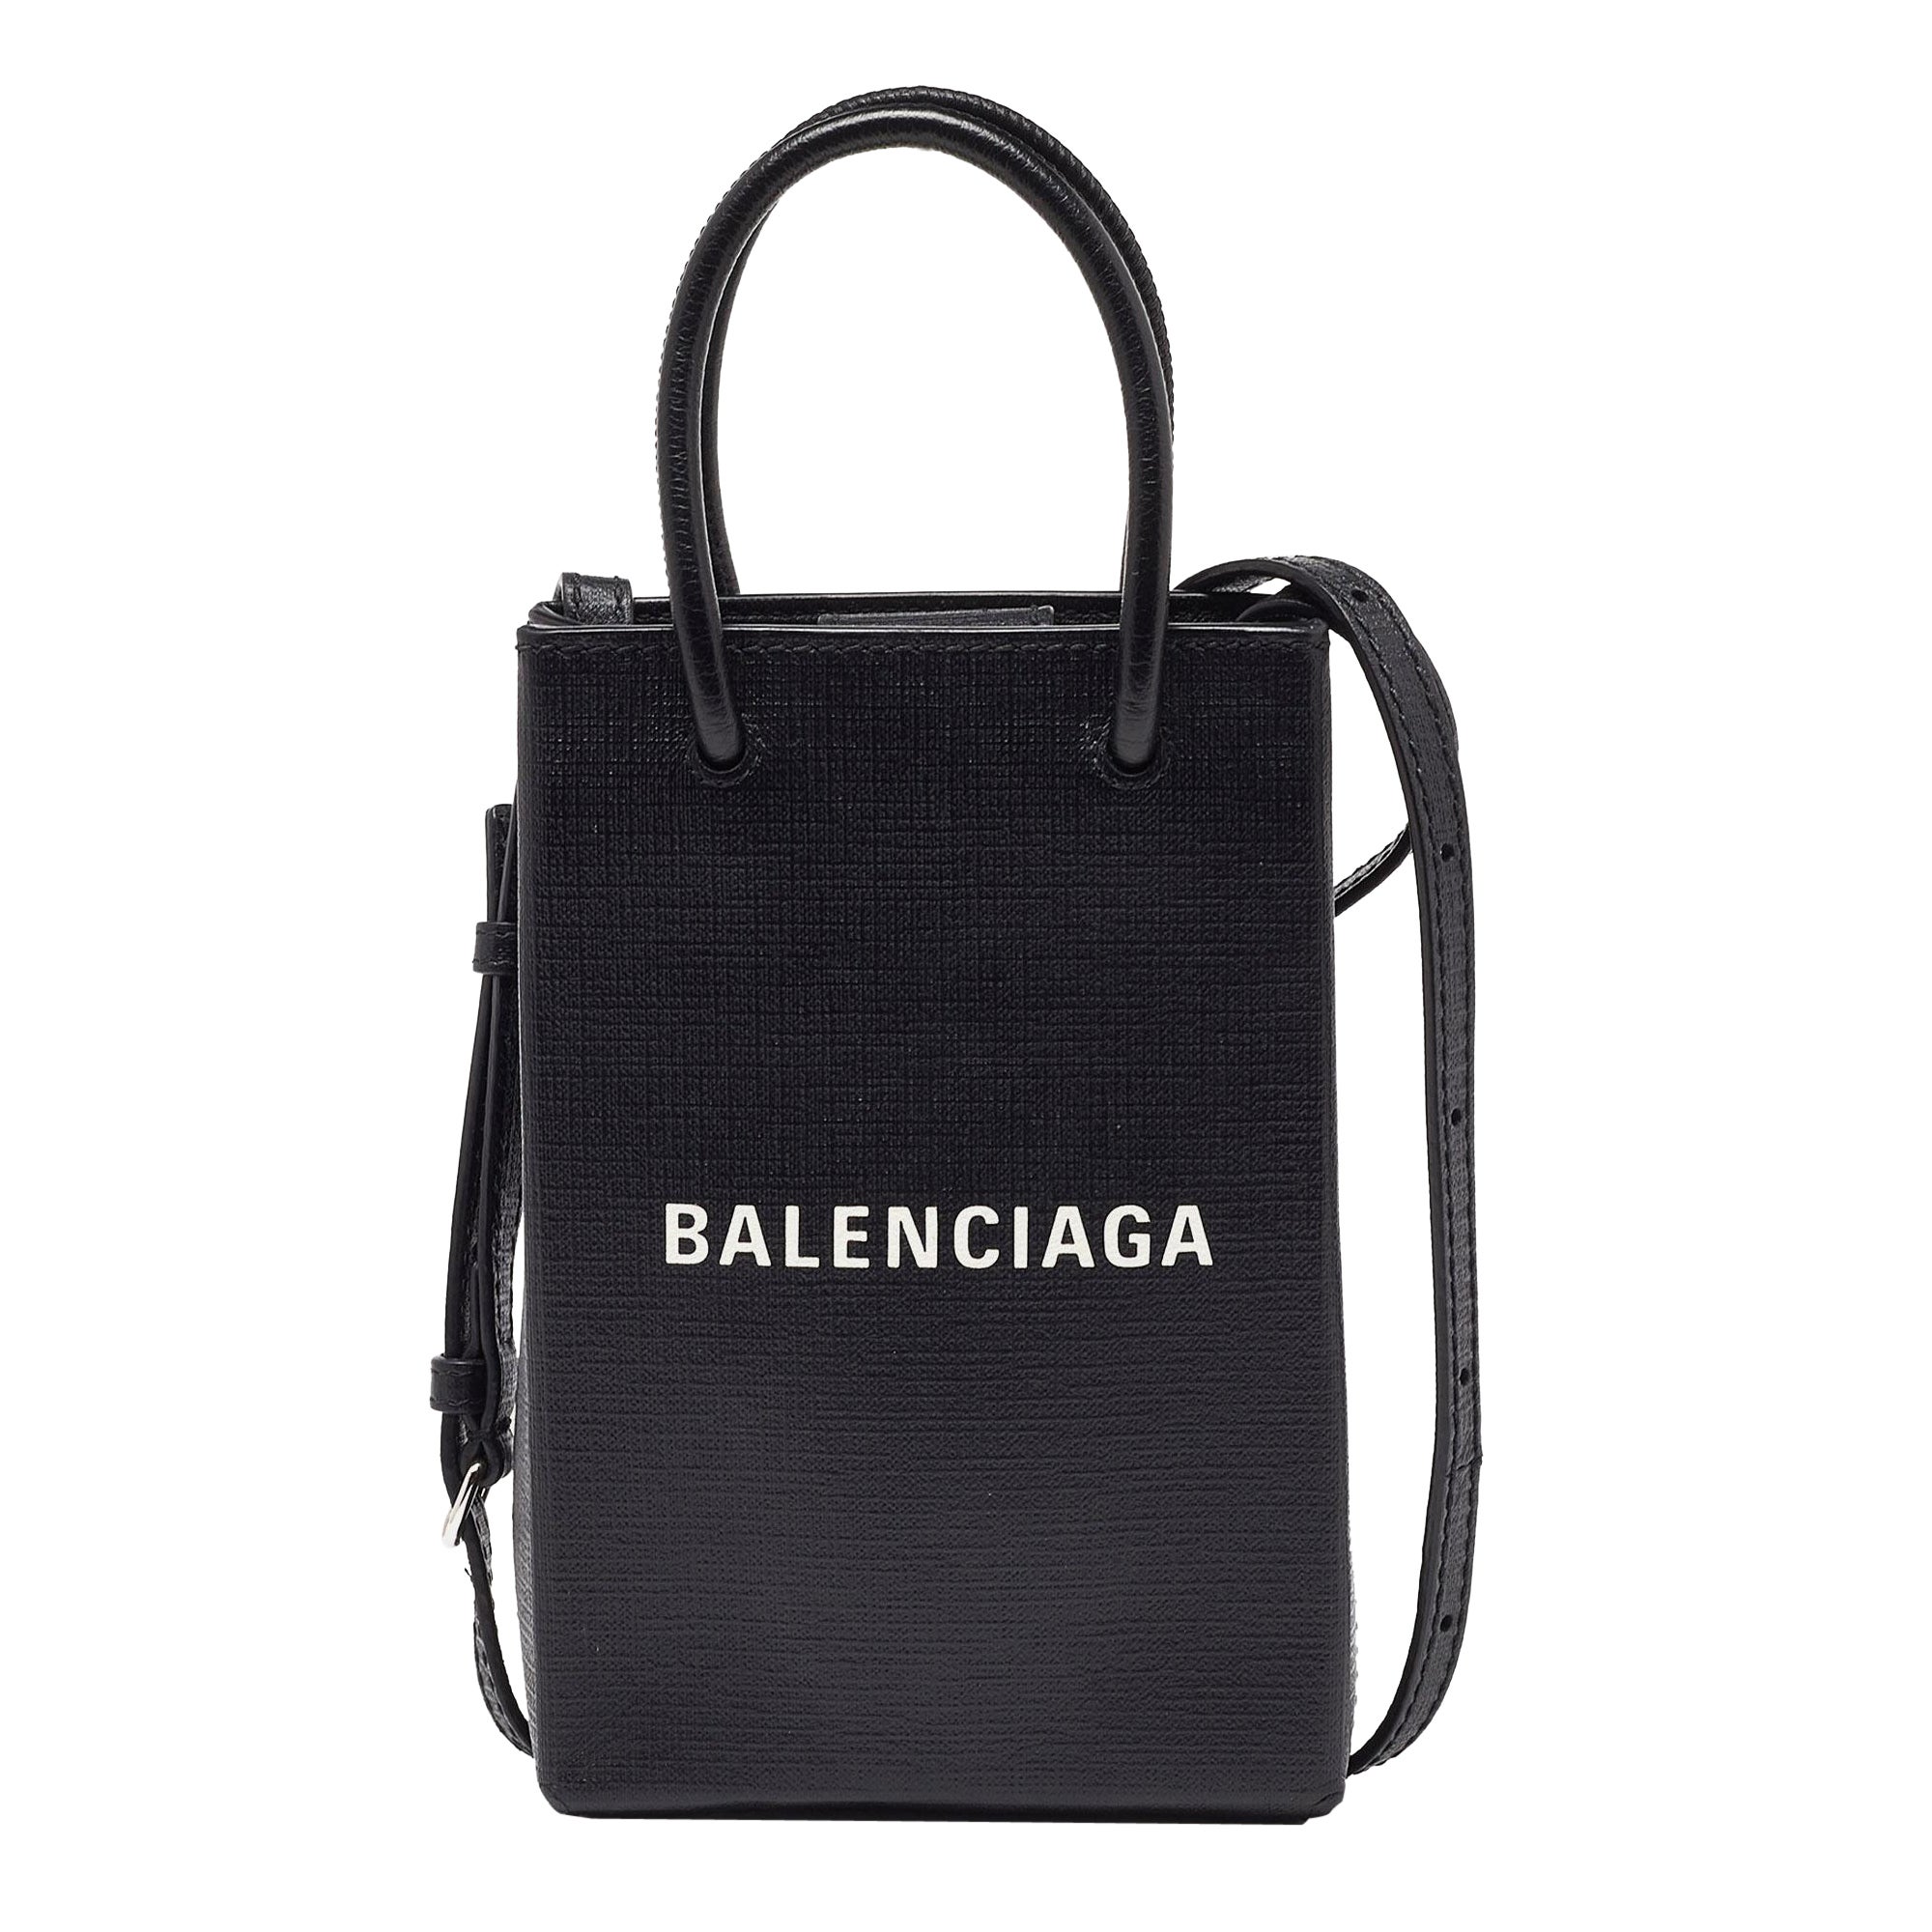 Can my MacBook fit in a Balenciaga City Bag?